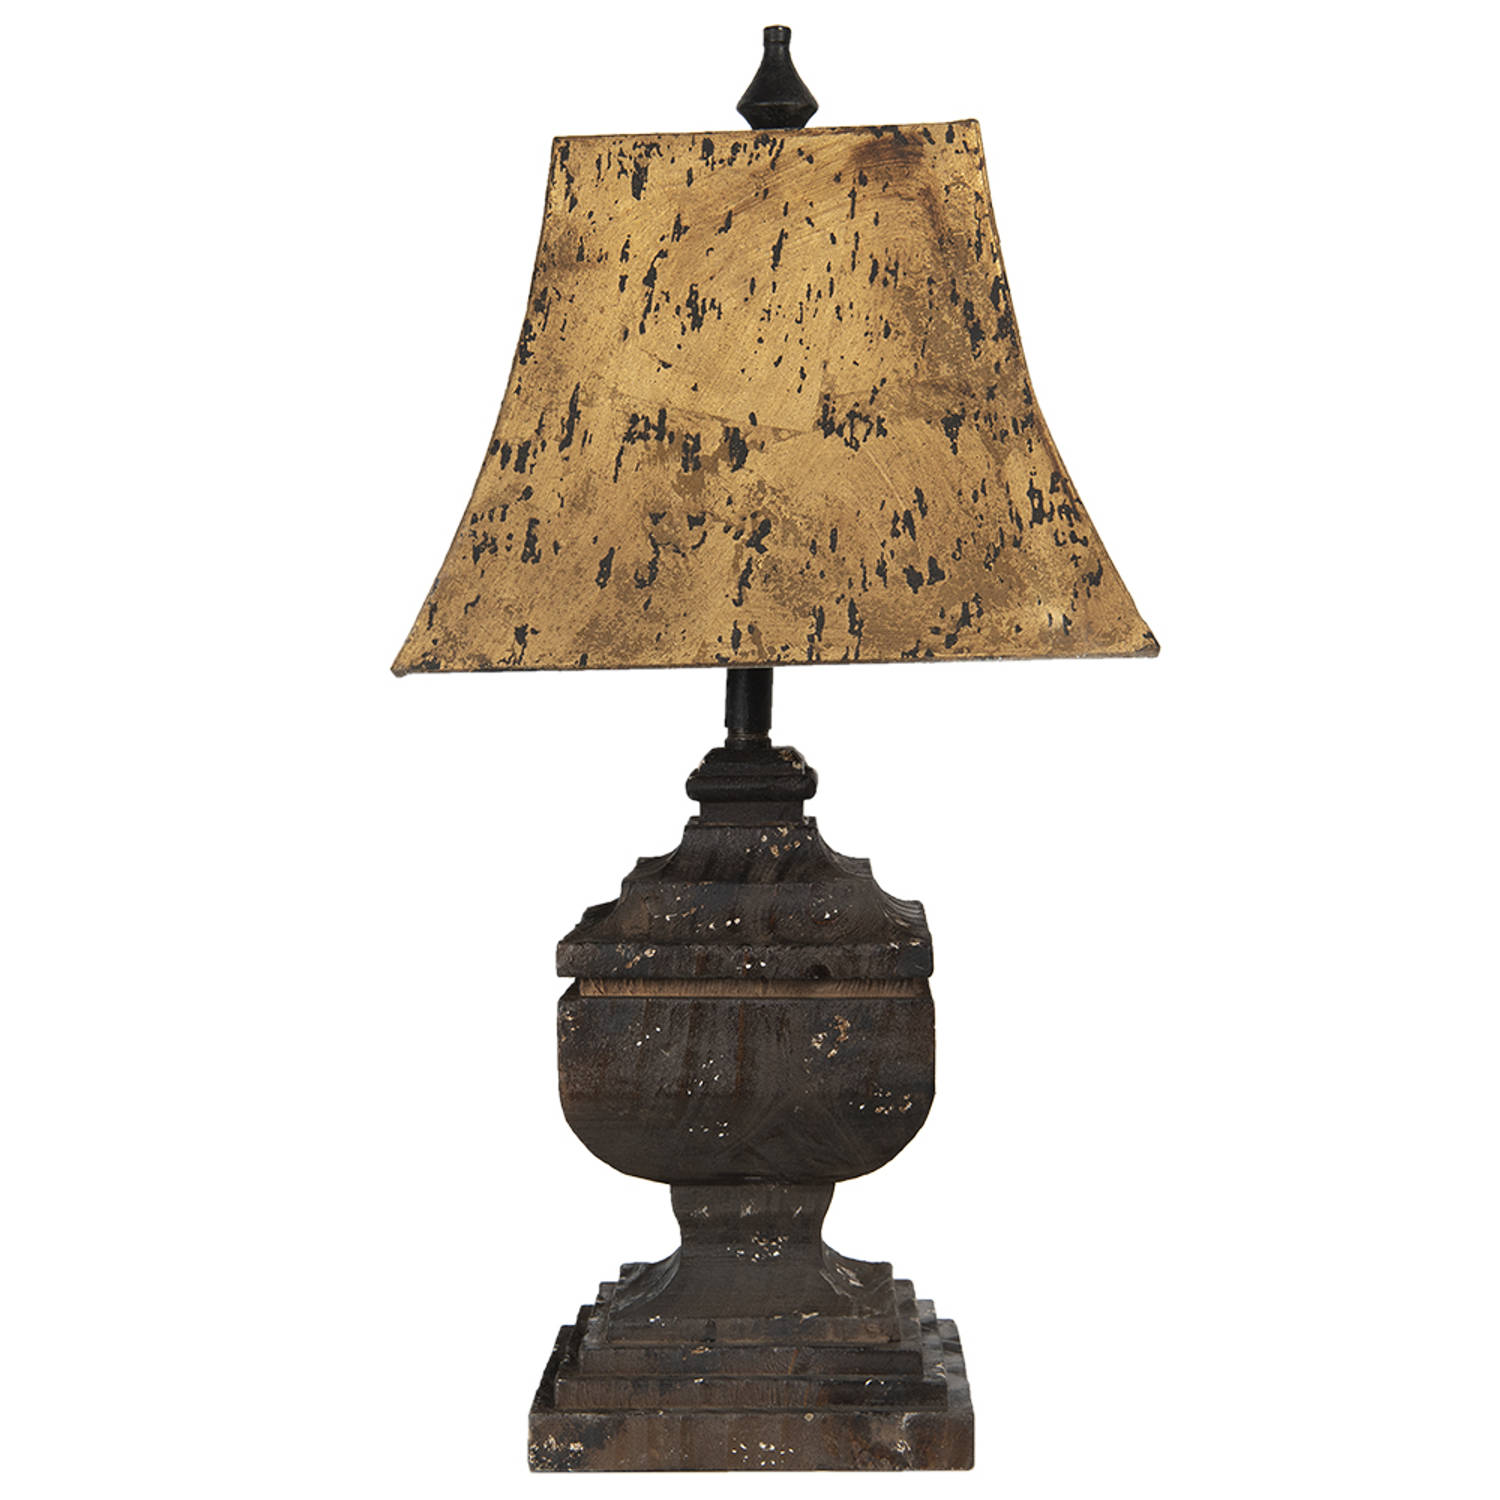 HAES DECO - Tafellamp - Dramatic Chic -Vintage / Retro Lamp, formaat 32x32x66 cm - Bruin Hout en Metaal - Bureaulamp, Sfeerlamp